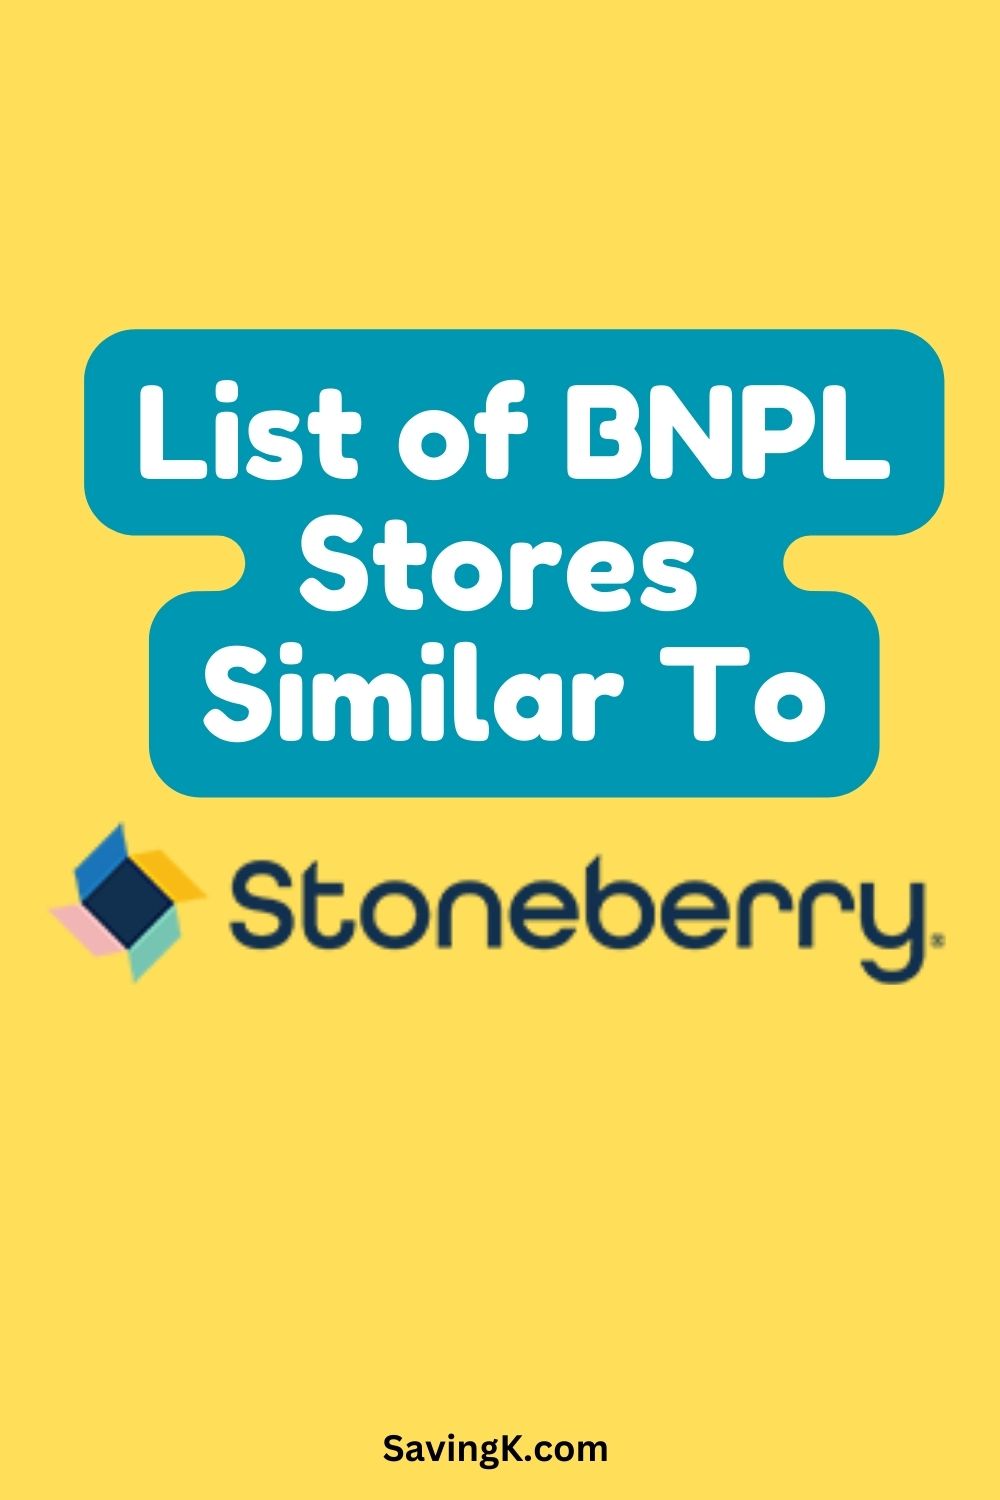 List of BNPL Stores Similar To Stoneberry